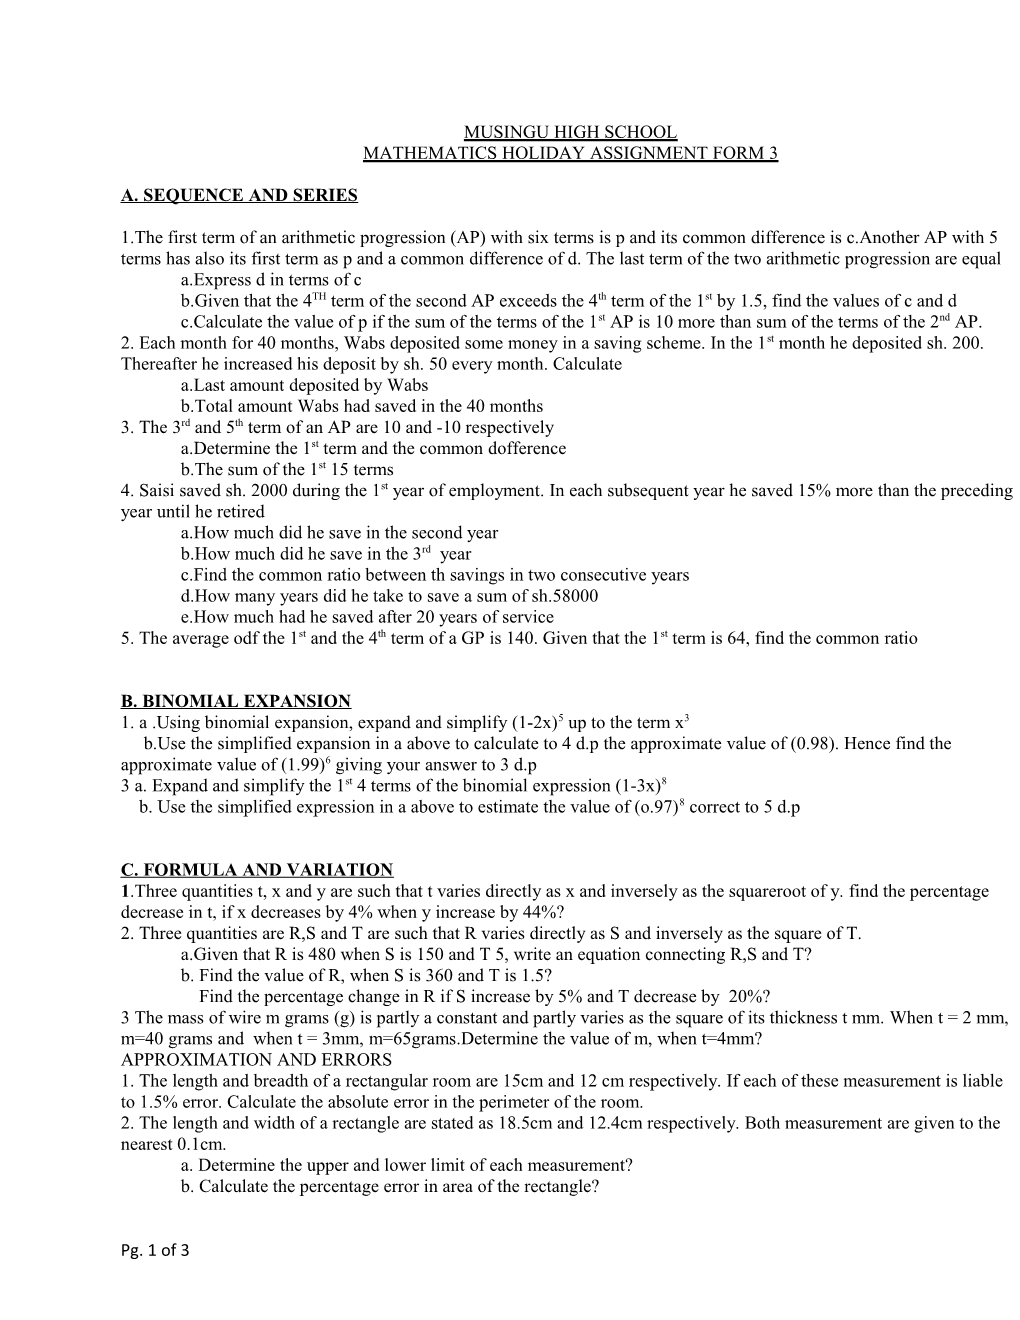 Mathematics Holiday Assignment Form 3